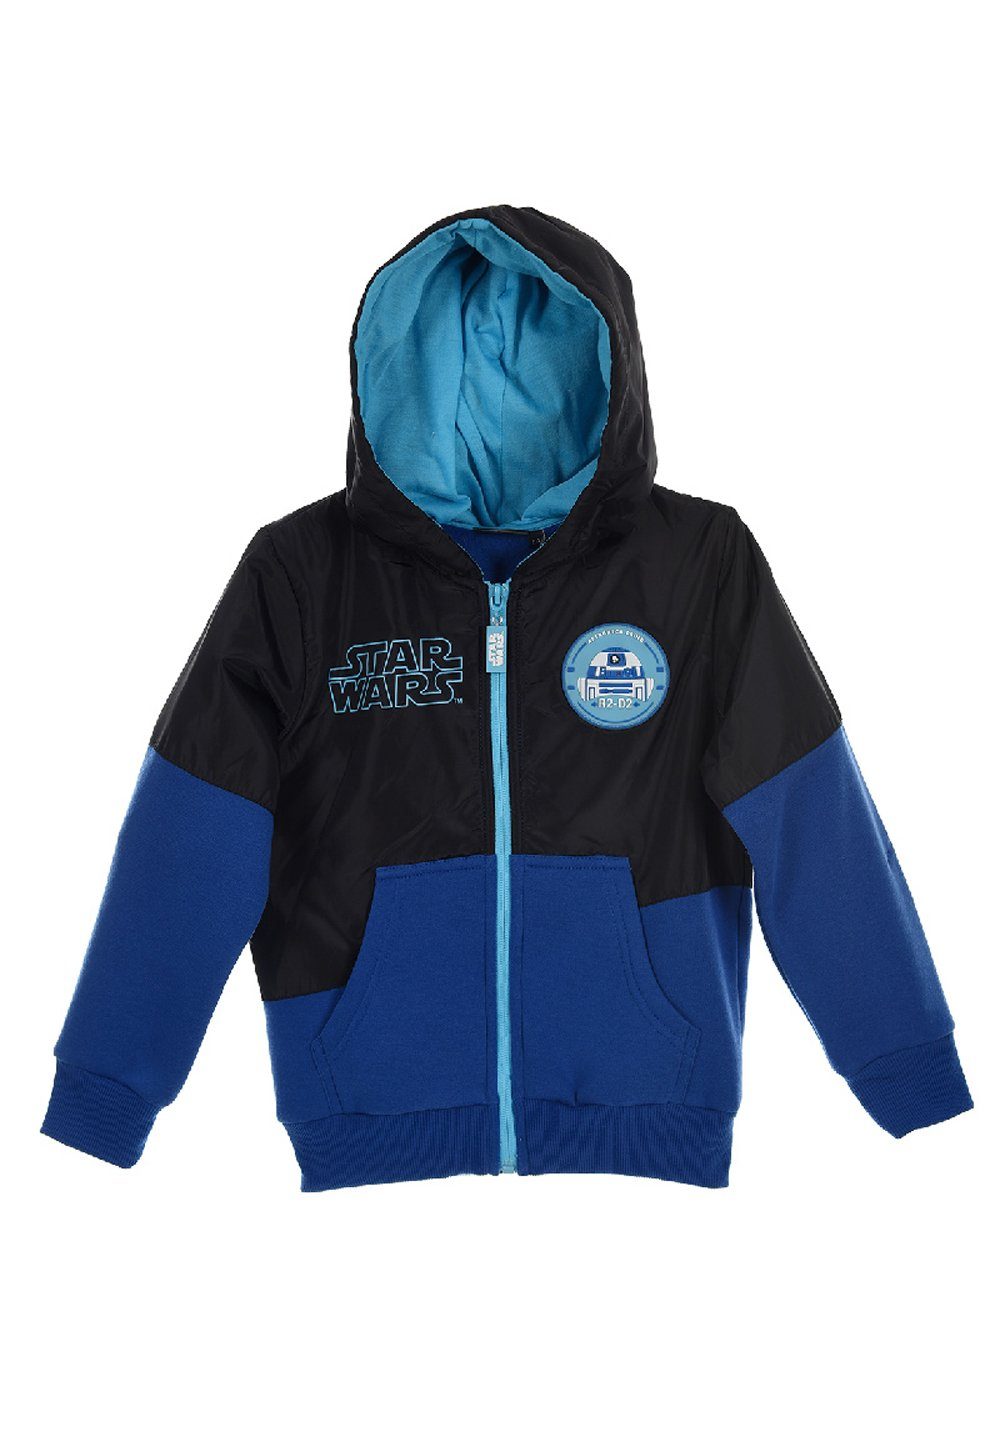 Star Wars Kapuzensweatjacke R2D2 Stormtrooper Winter Übergangs Jacke mit Kapuze Blau